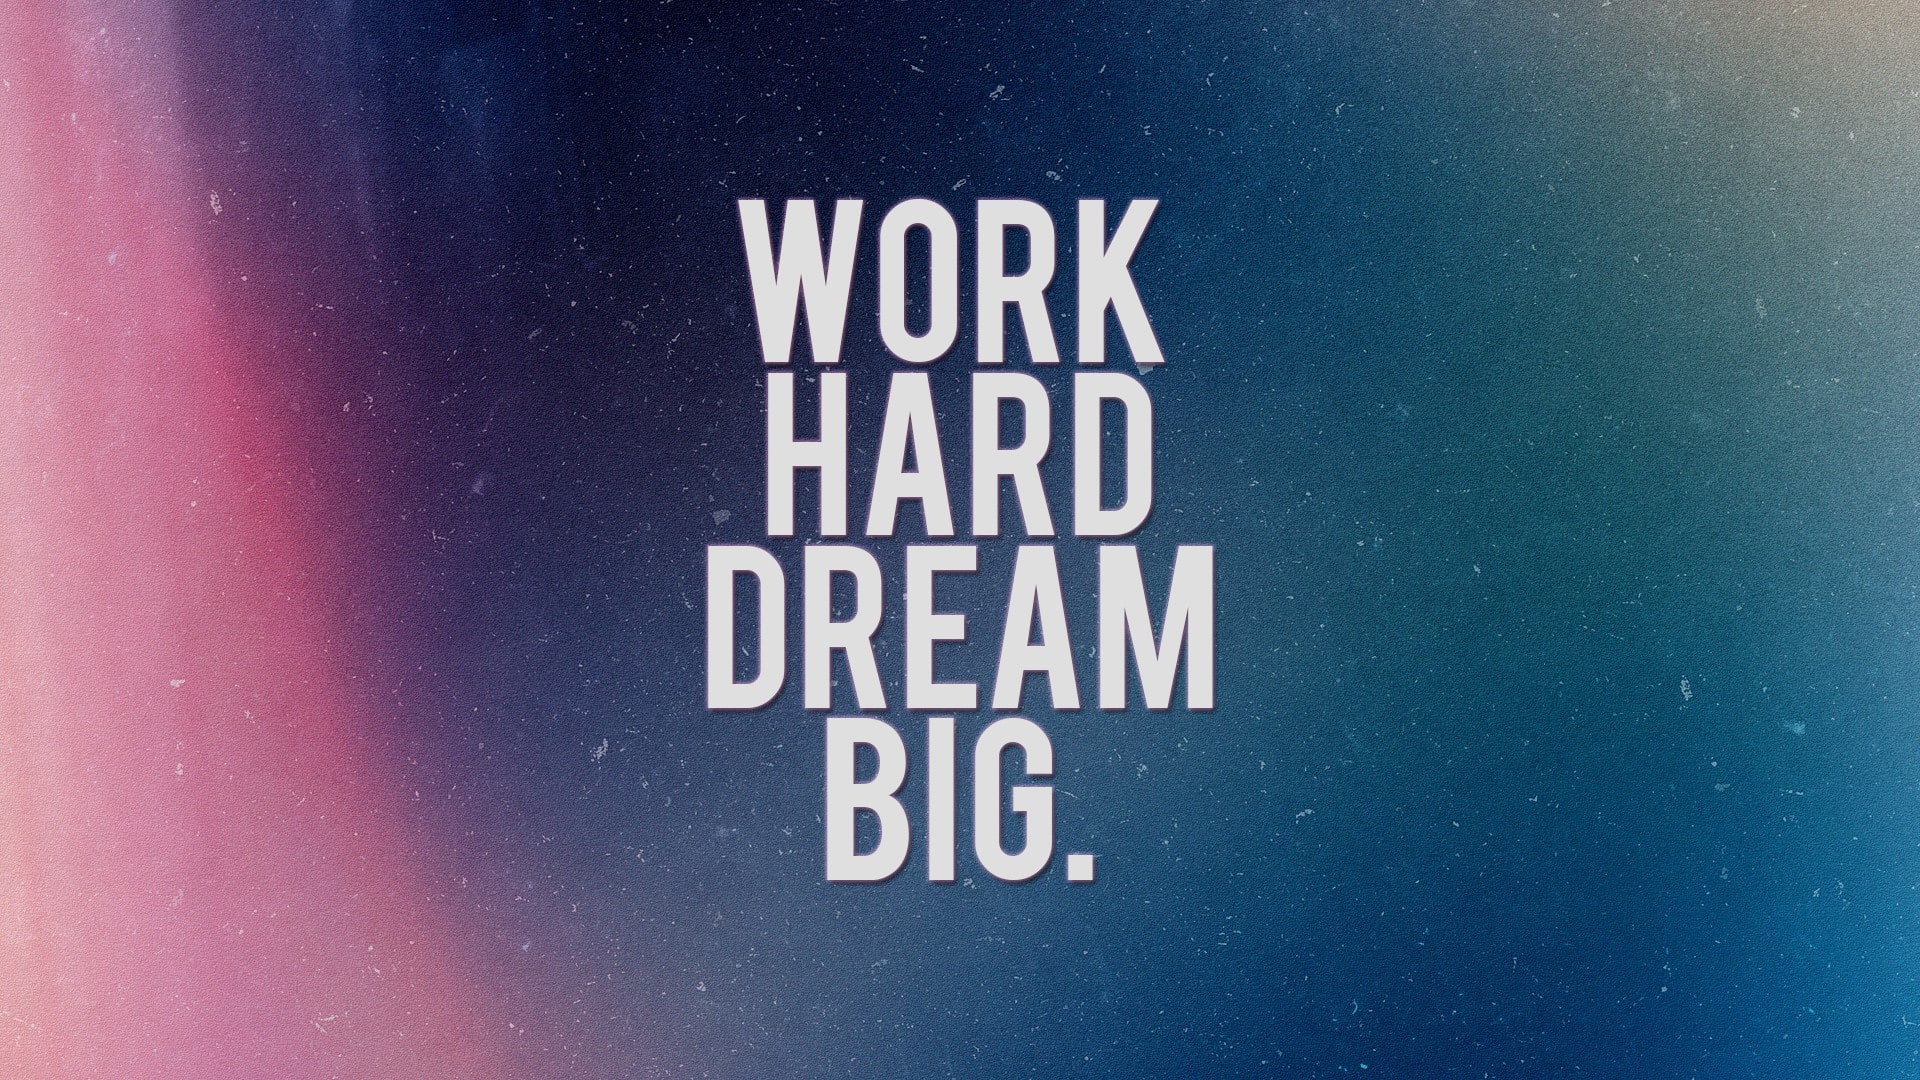 Work hard, dream big